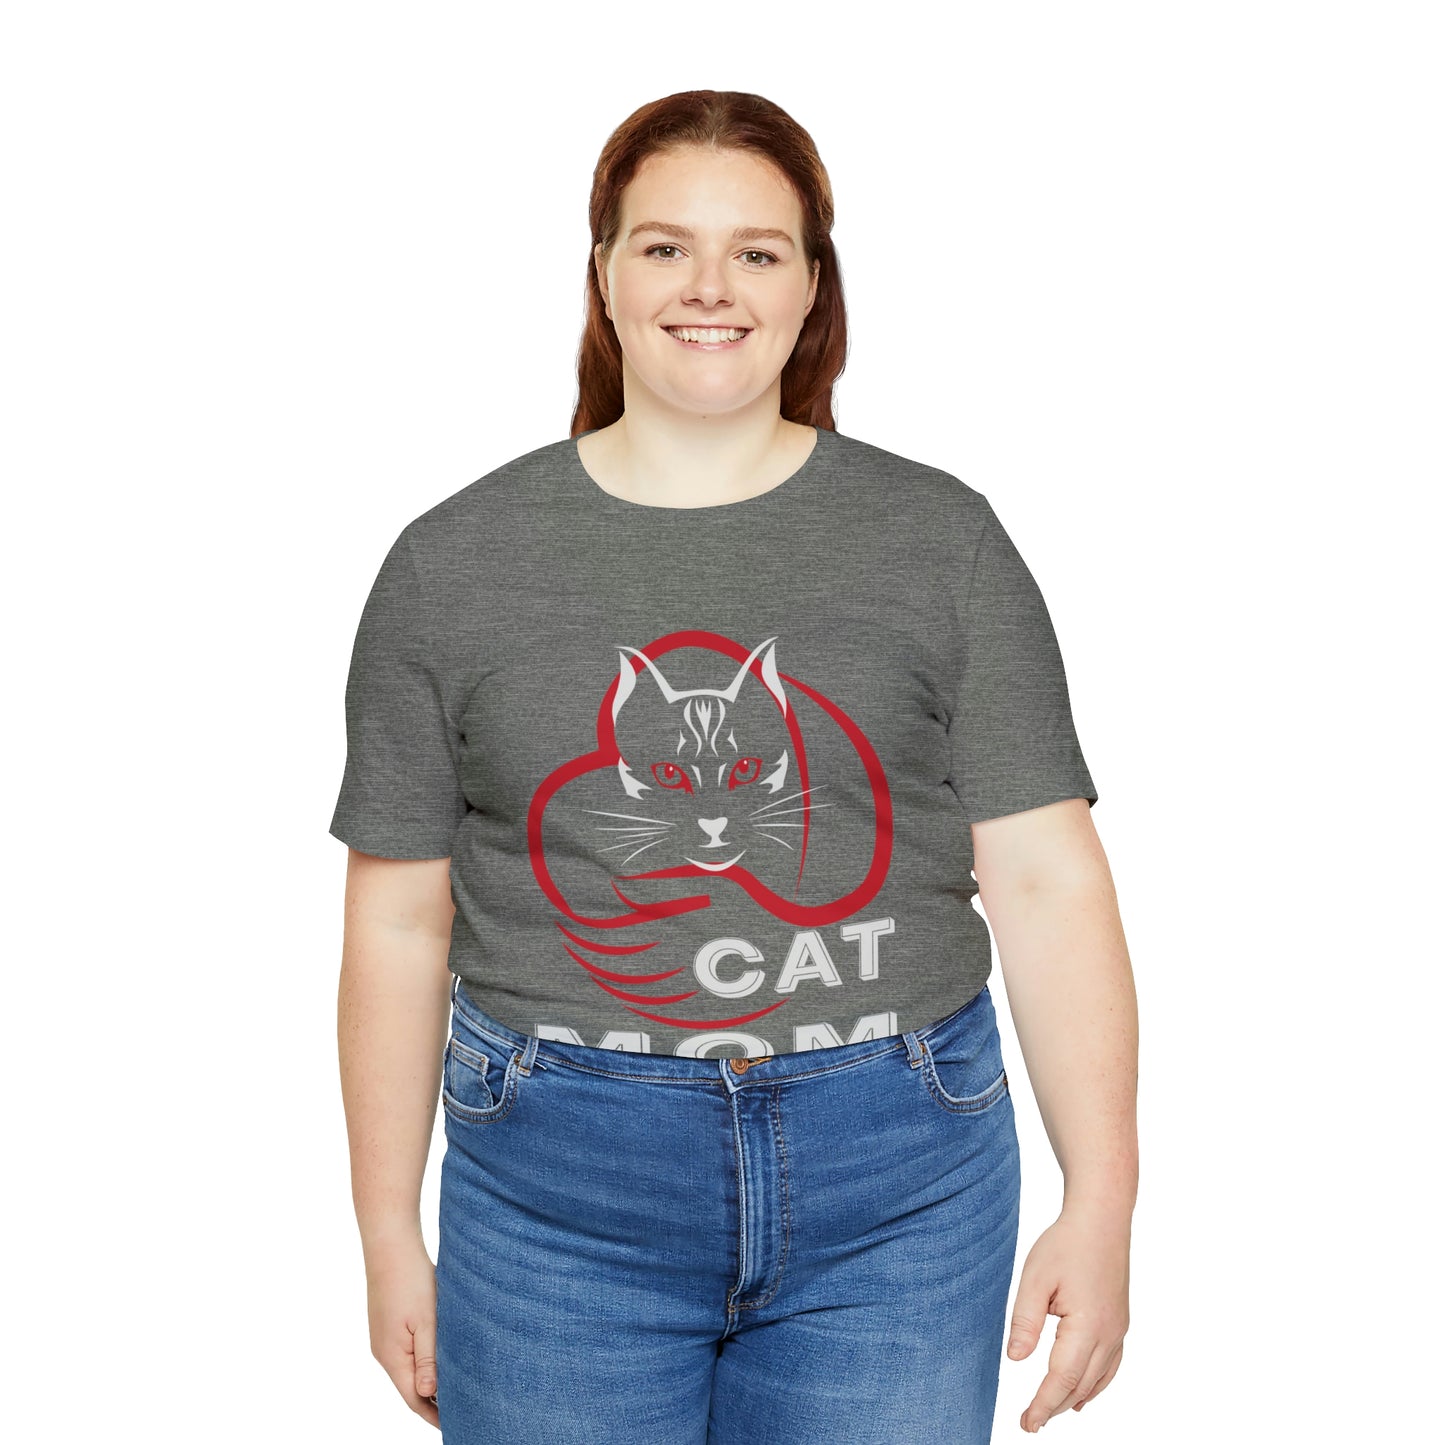 Cat Mom Short Sleeve T-shirt